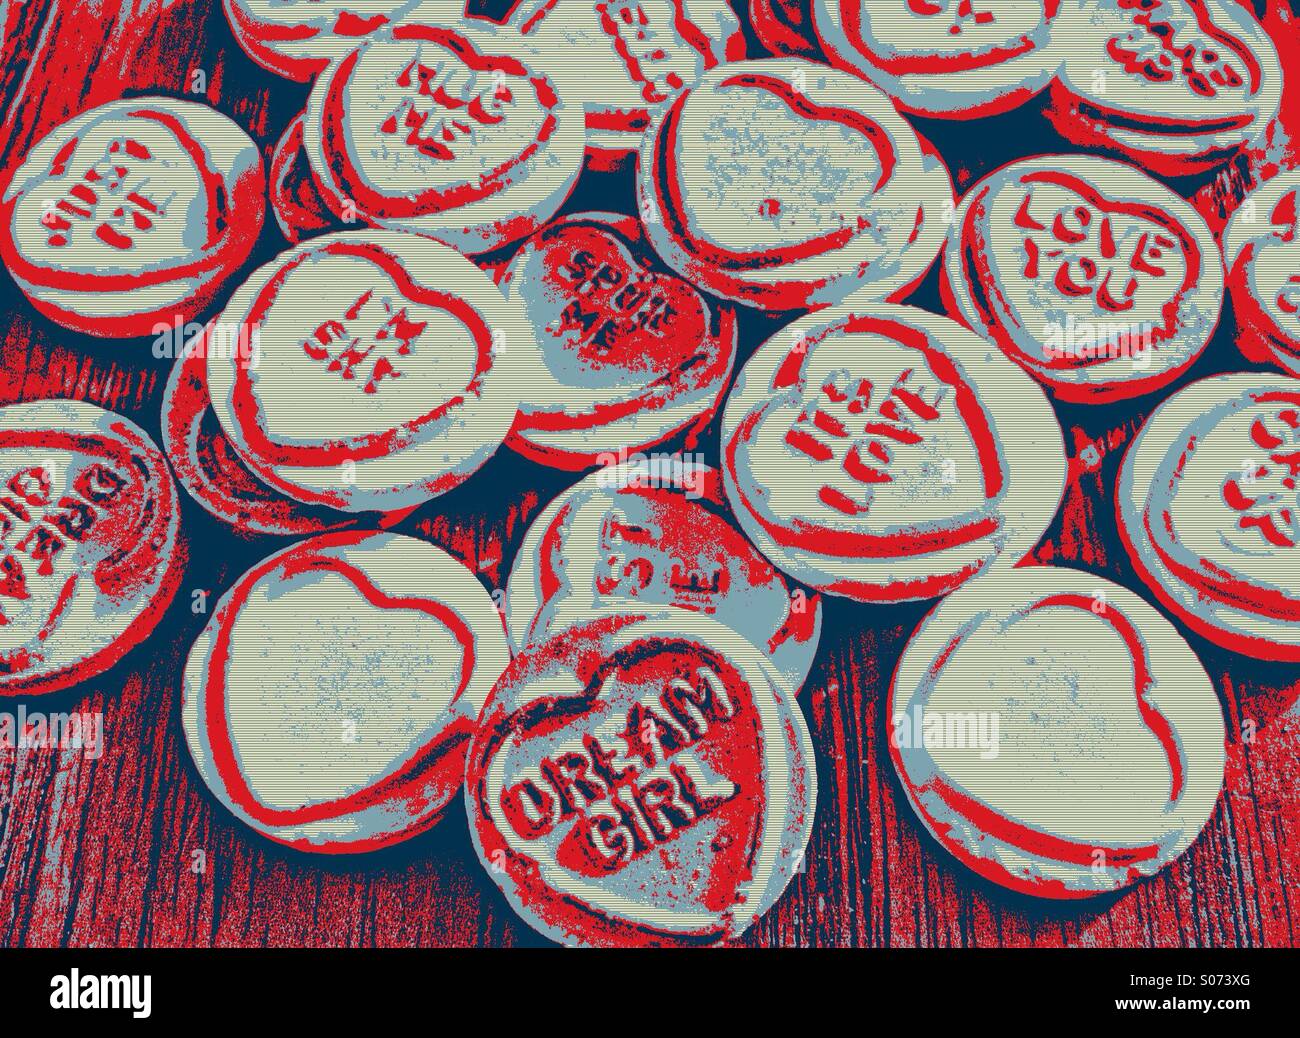 Pop art style photo of love heart sweets Stock Photo